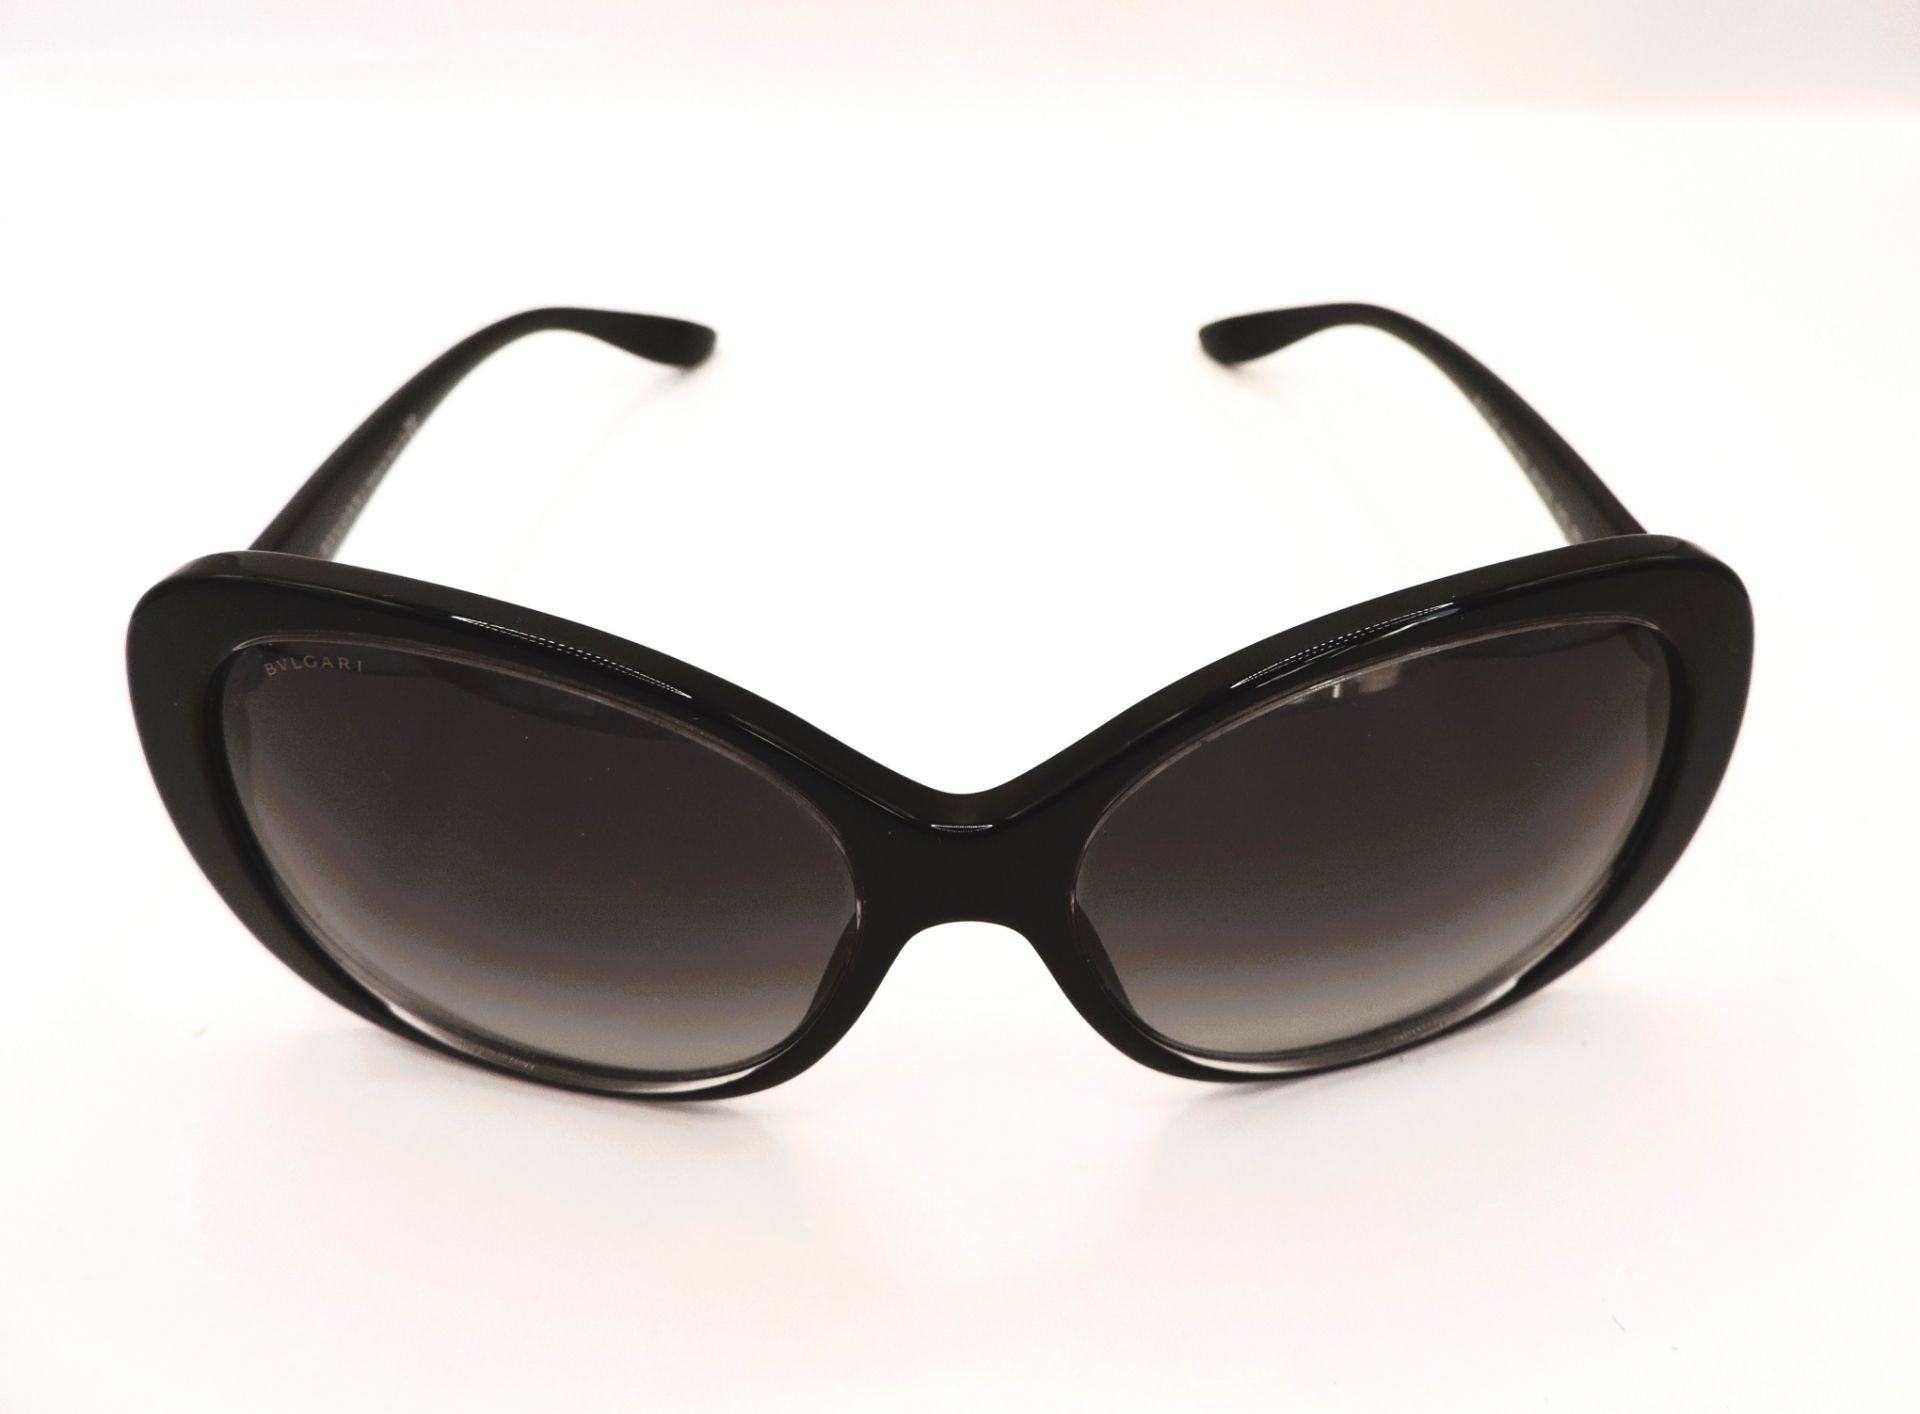 BVLGARI Black Sunglasses 8171-C Jewelled Hinged Detail New With Box & Certificate - Image 9 of 17